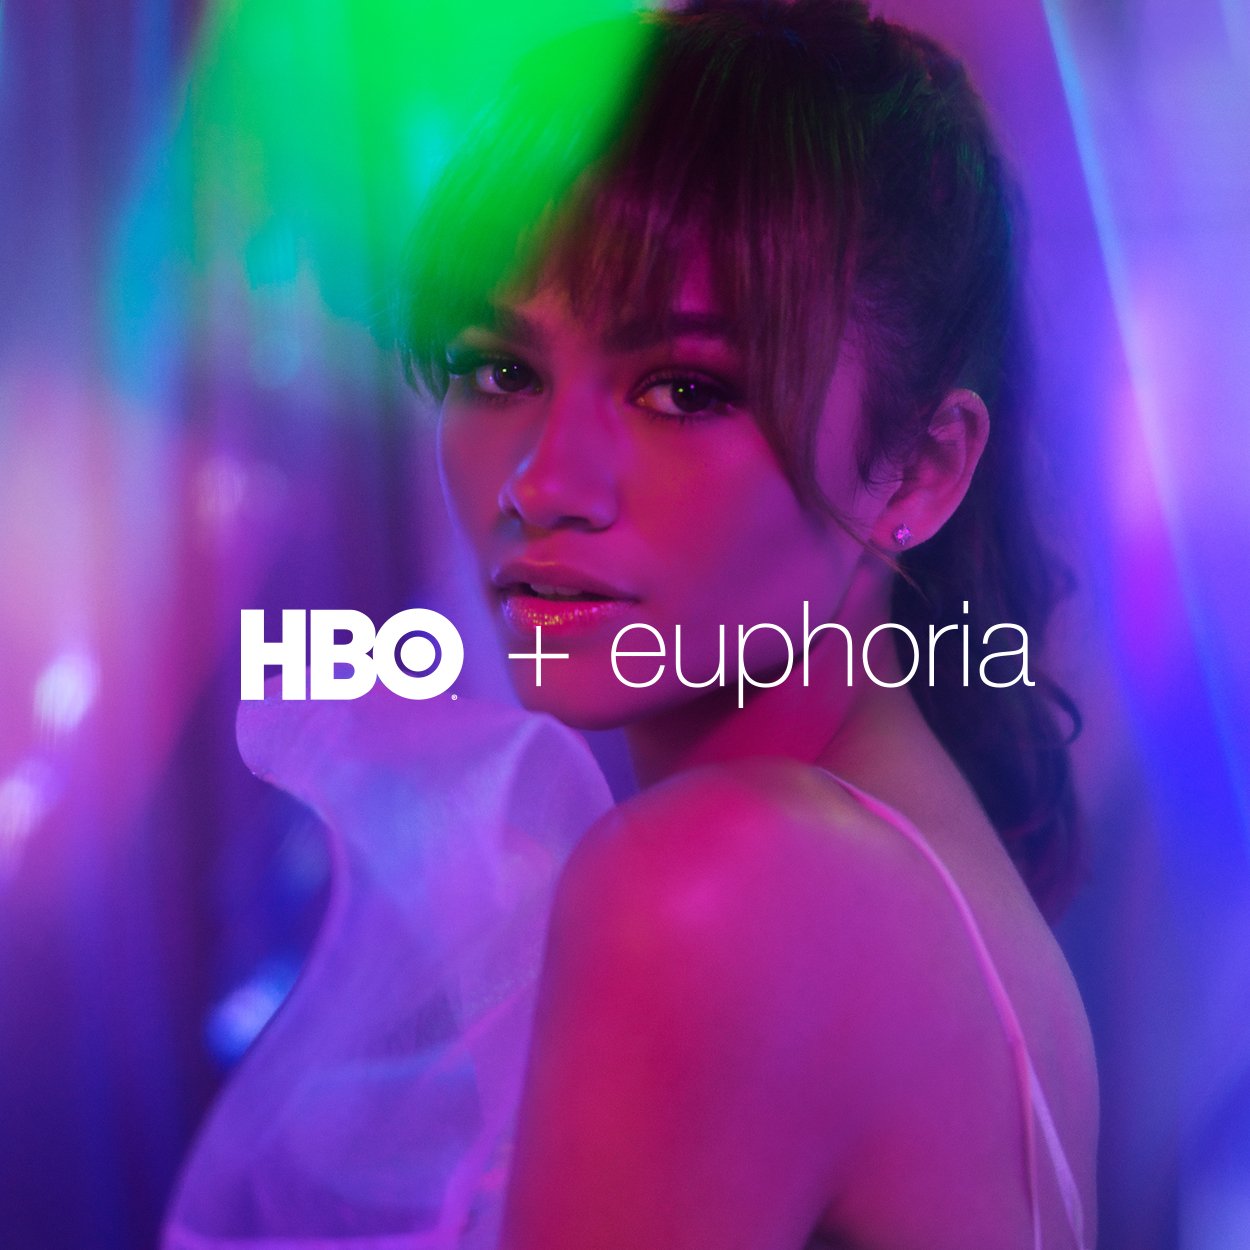 HBO+euphoria_footer_600px-2.jpg